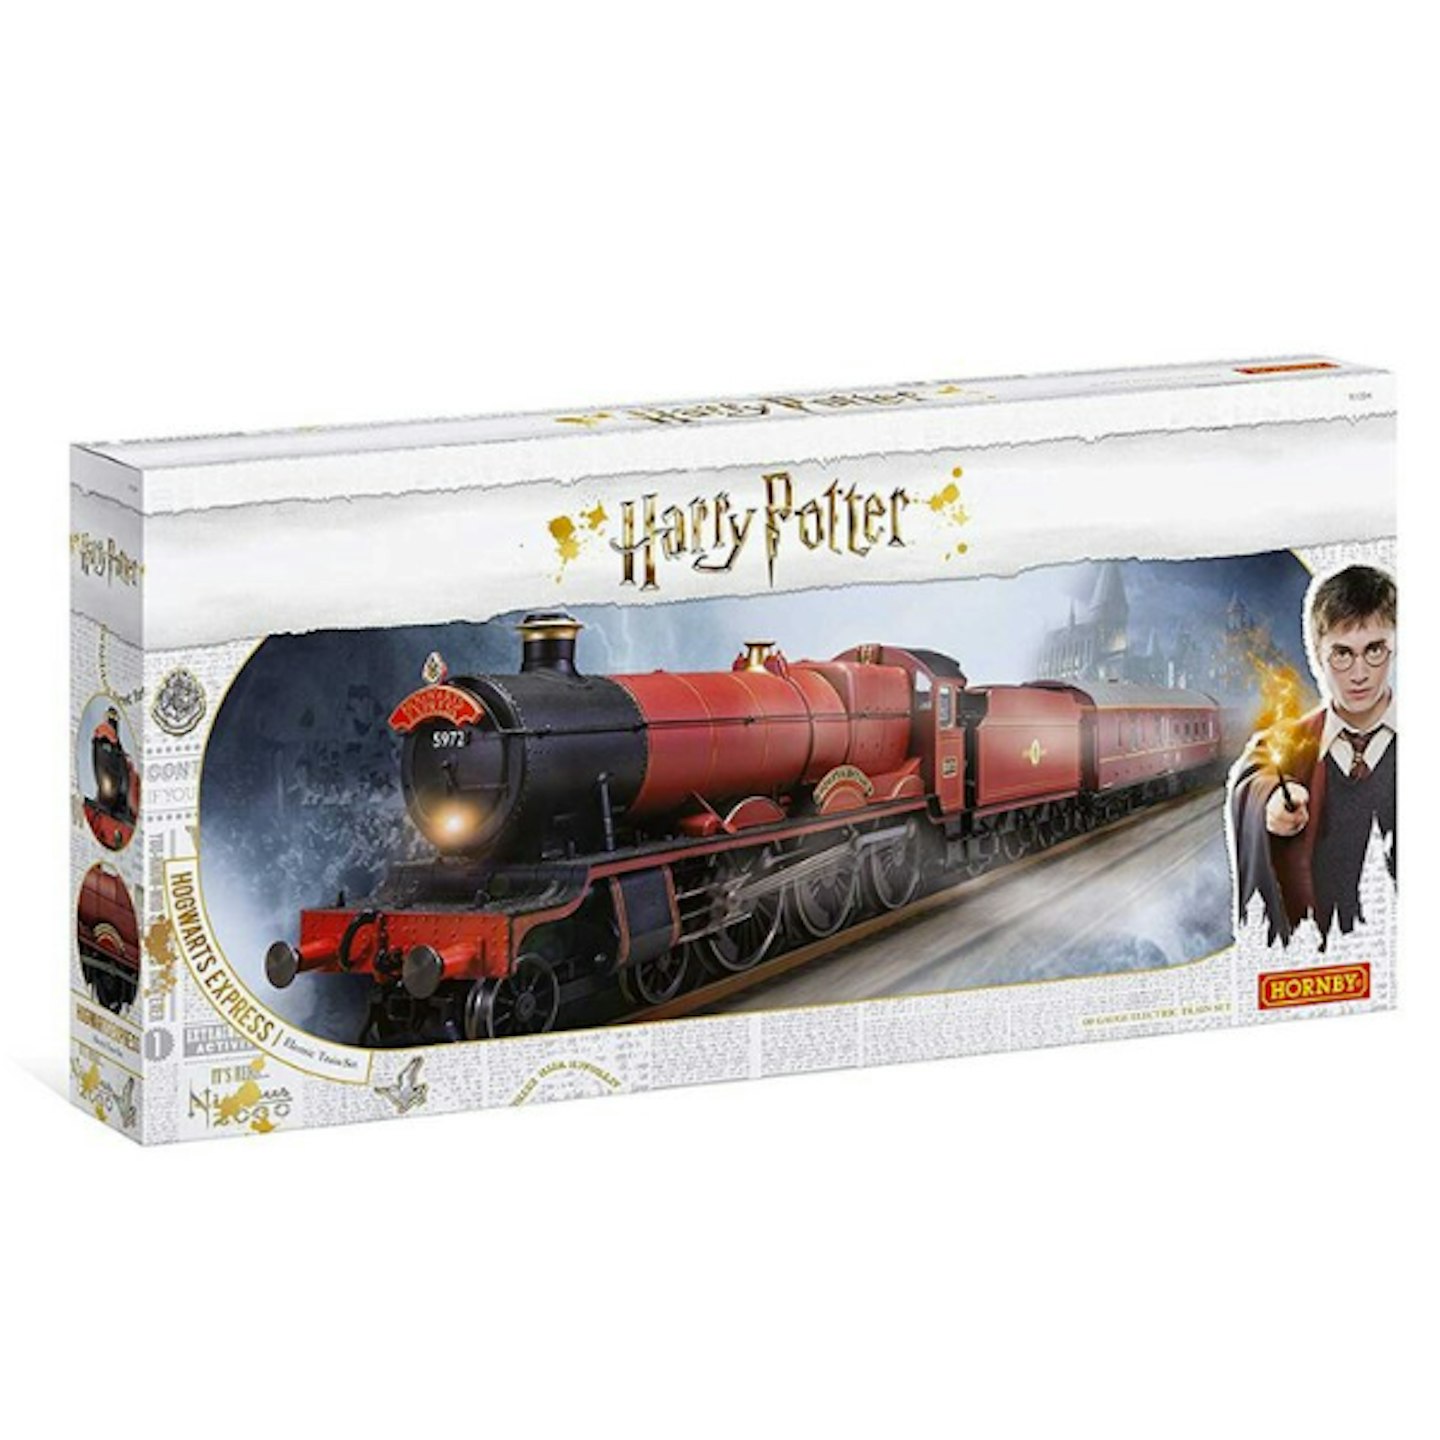 Hornby Hogwarts Express, u00a3160 (RRP u00a3199.99), amazon.co.uk